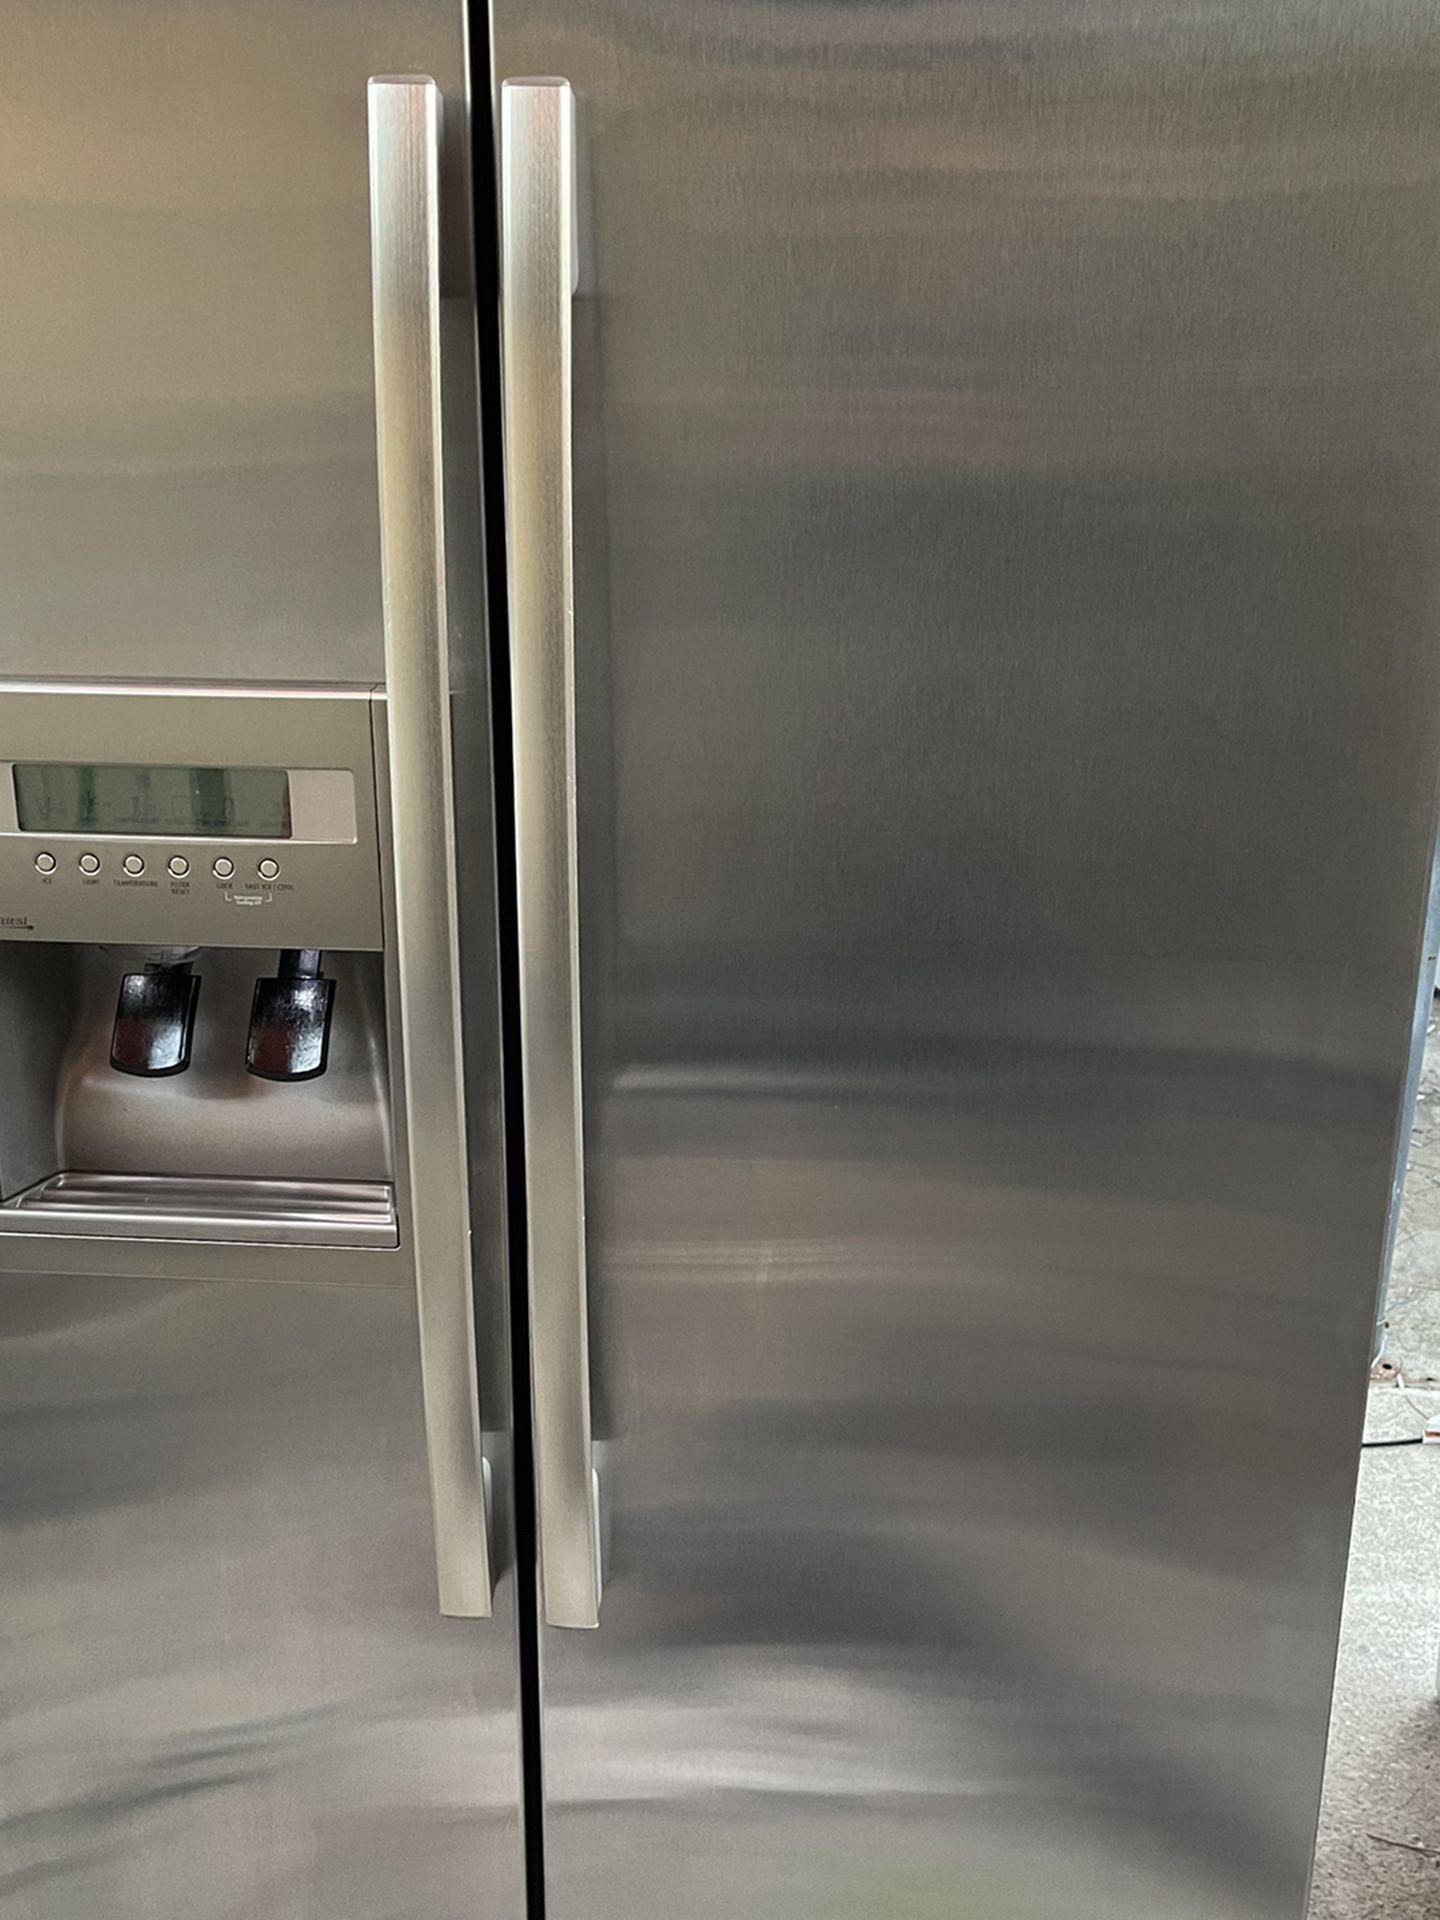 Refrigerator Whirlpool Good Condition Work Perfect